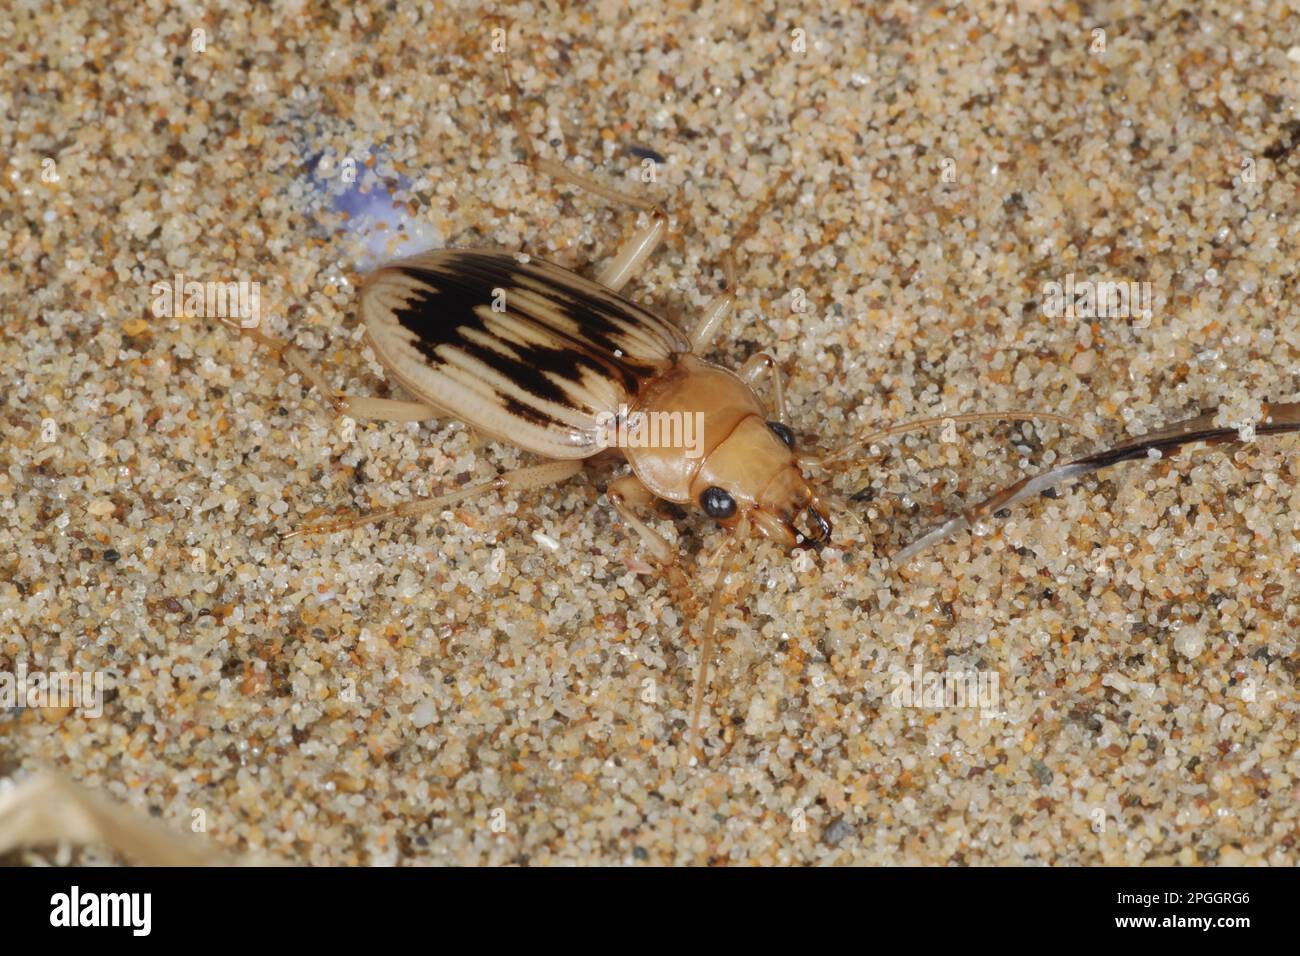 Beachcomber Beetle (Nebria complanata) adult, under strandline debris on beach, Gower Peninsula, Glamorgan, Wales, United Kingdom Stock Photo